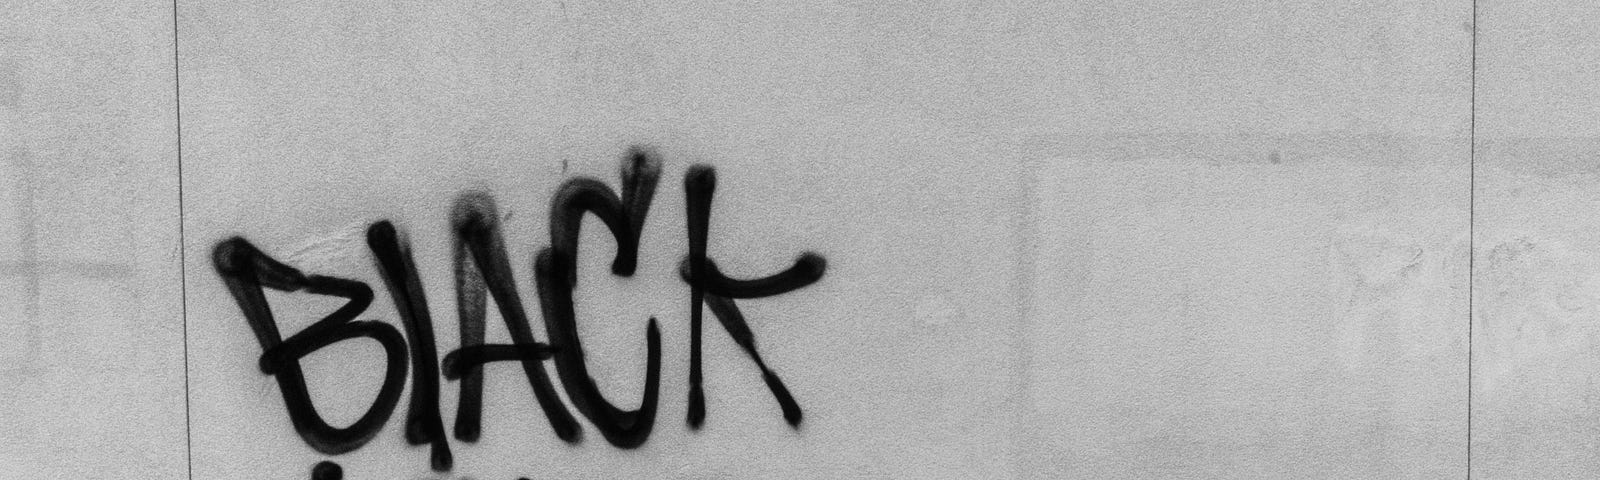 Simple black graffiti displaying the slogan: “Black Lives Matter!”